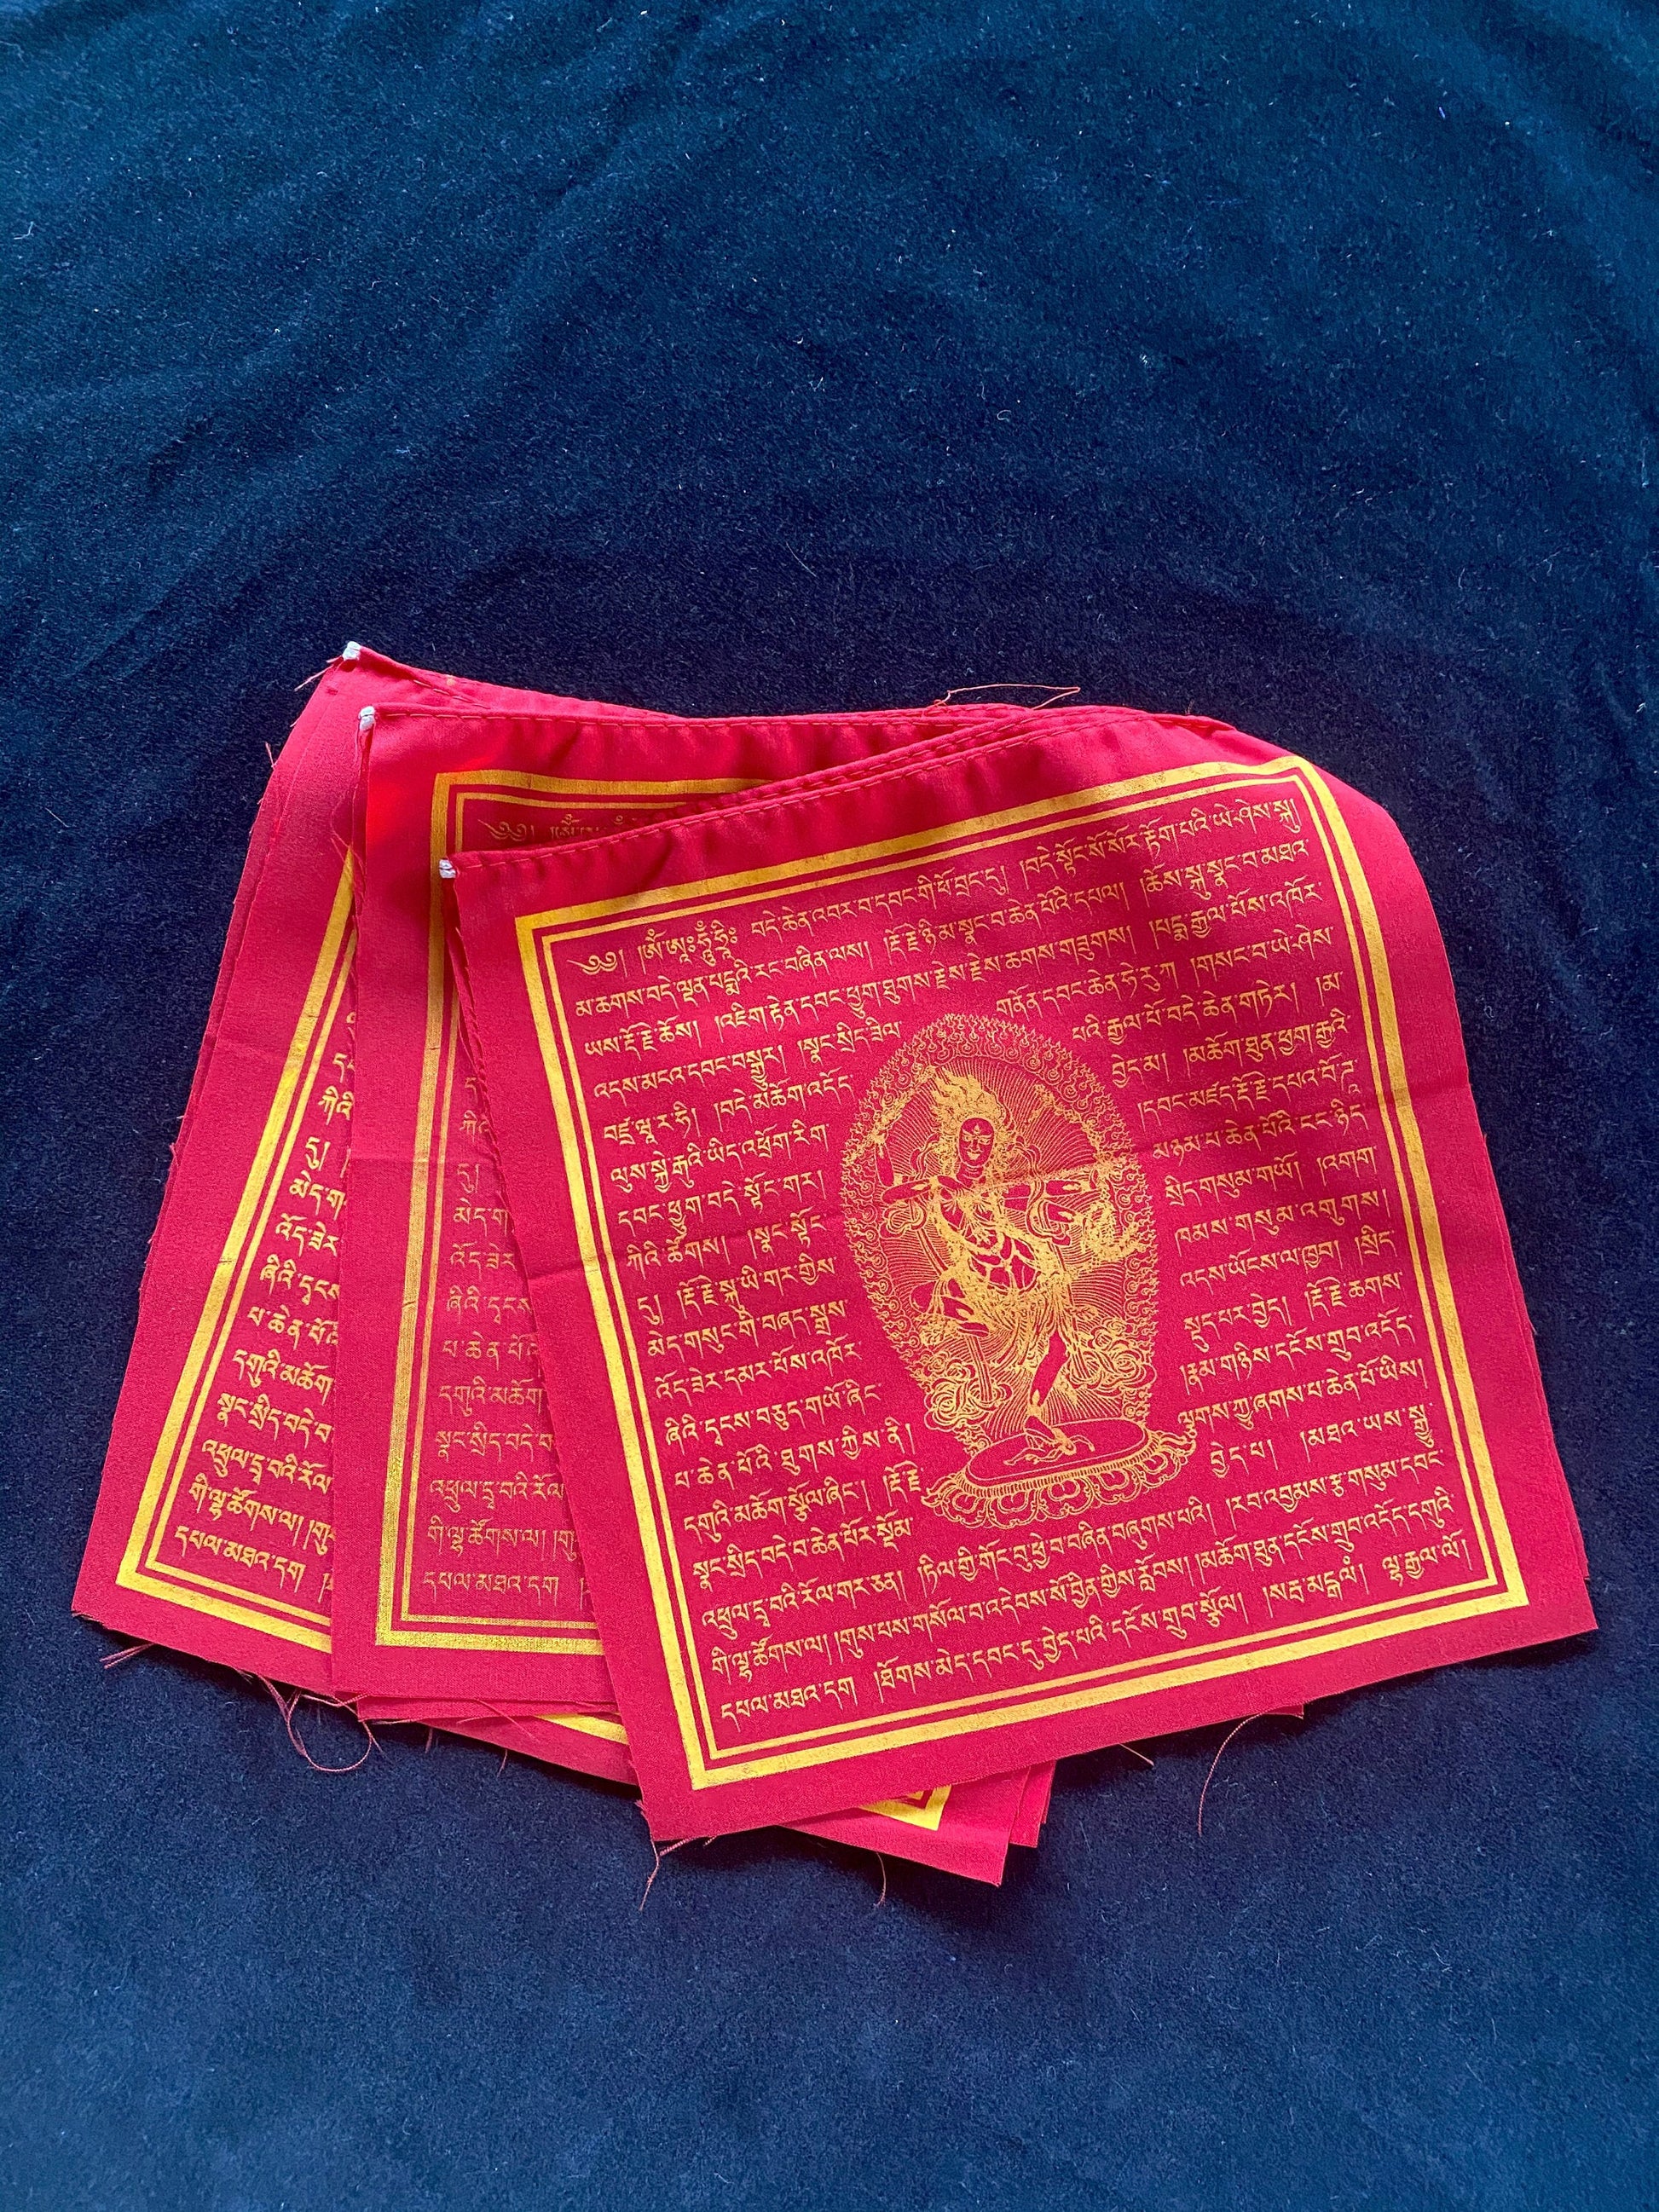 Wangdü Soldep / Kurukulle Prayer Flags | Tibetan Prayer Flags | 8in x 8in | 1 set of 10 flags | All Red | The Great Cloud of Blessings